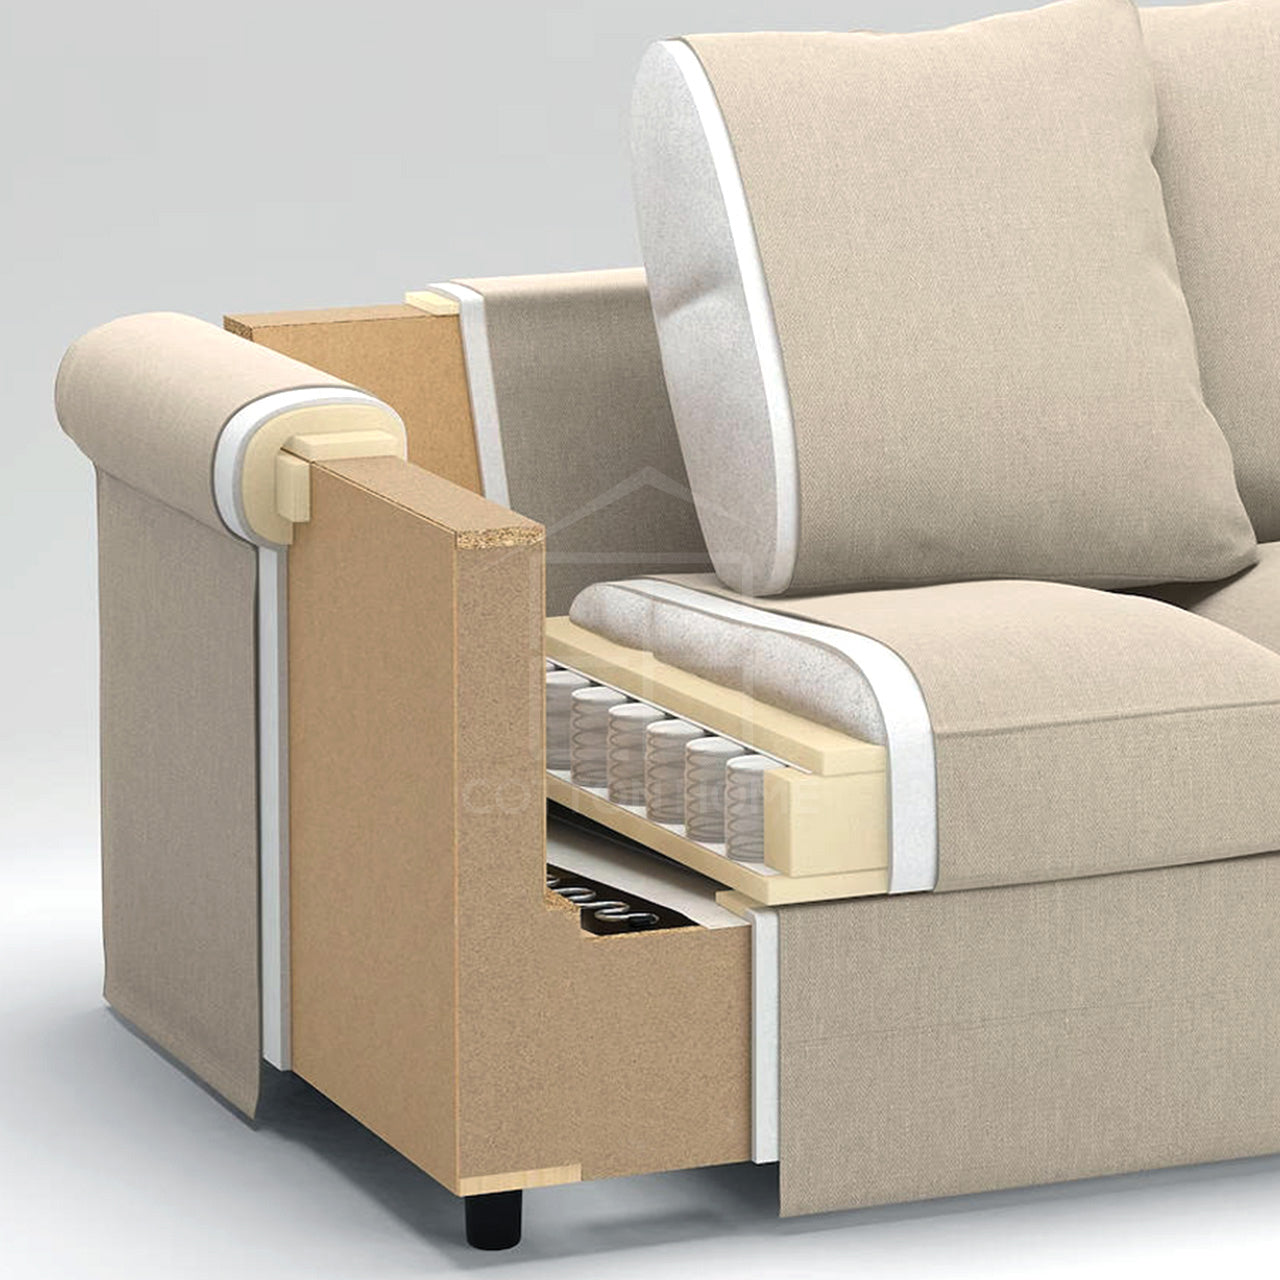 Urbanite 4 Seater Chaise Longue Fabric Sofa L126cm x W328cm x H104cm Beige